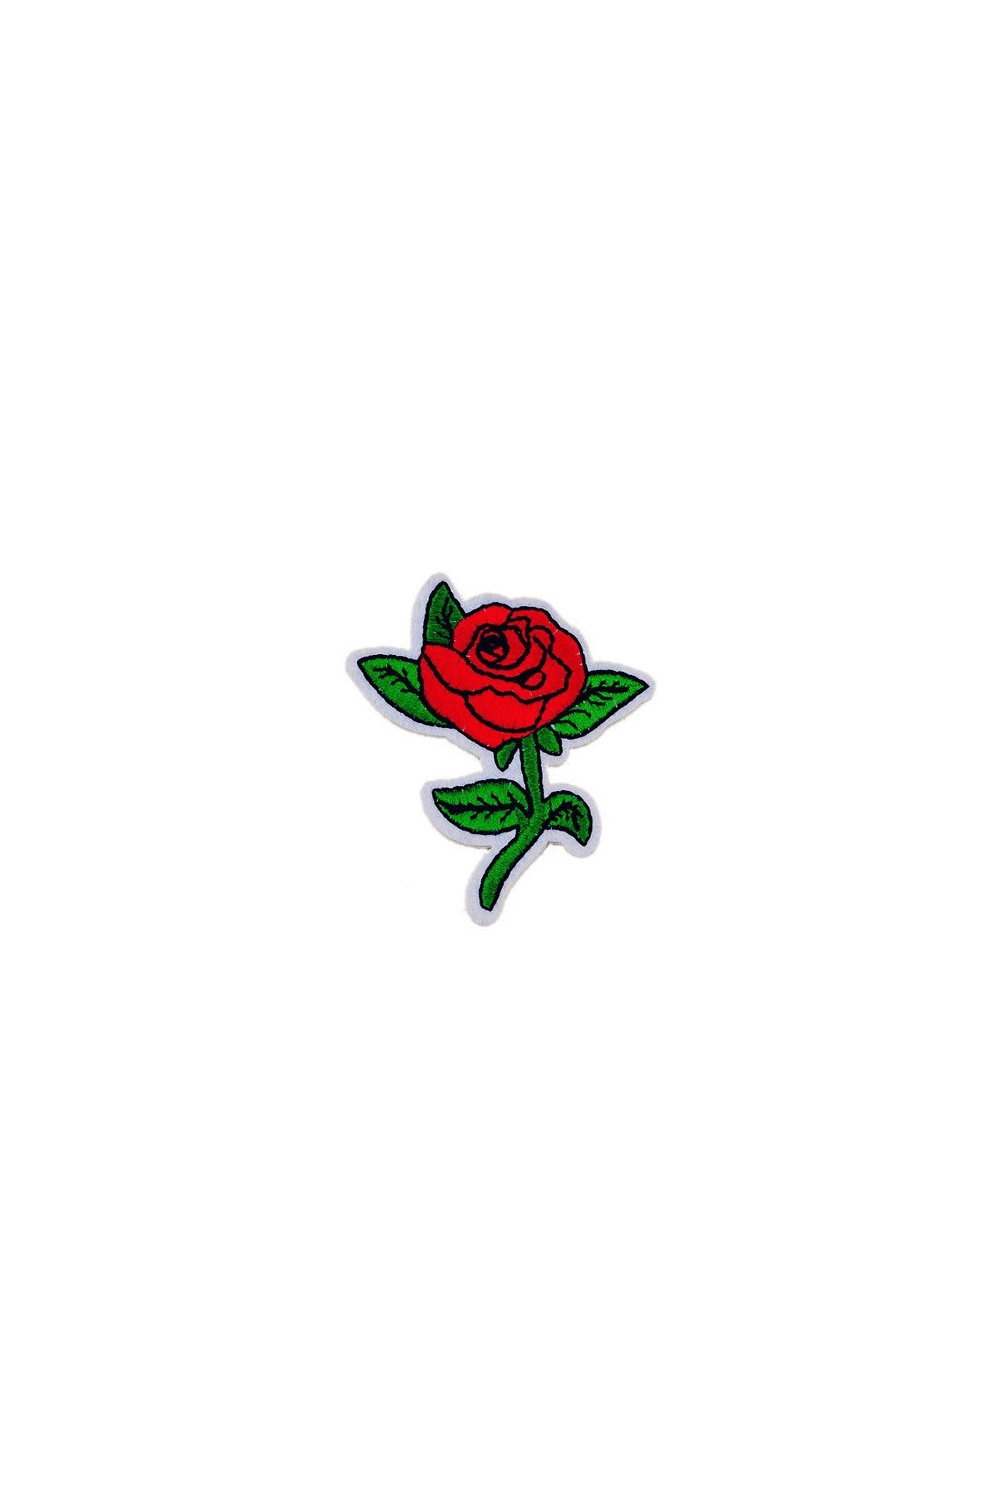 Rose Clothing Logo - Supreme Rose Logo - Clipart & Vector Design •